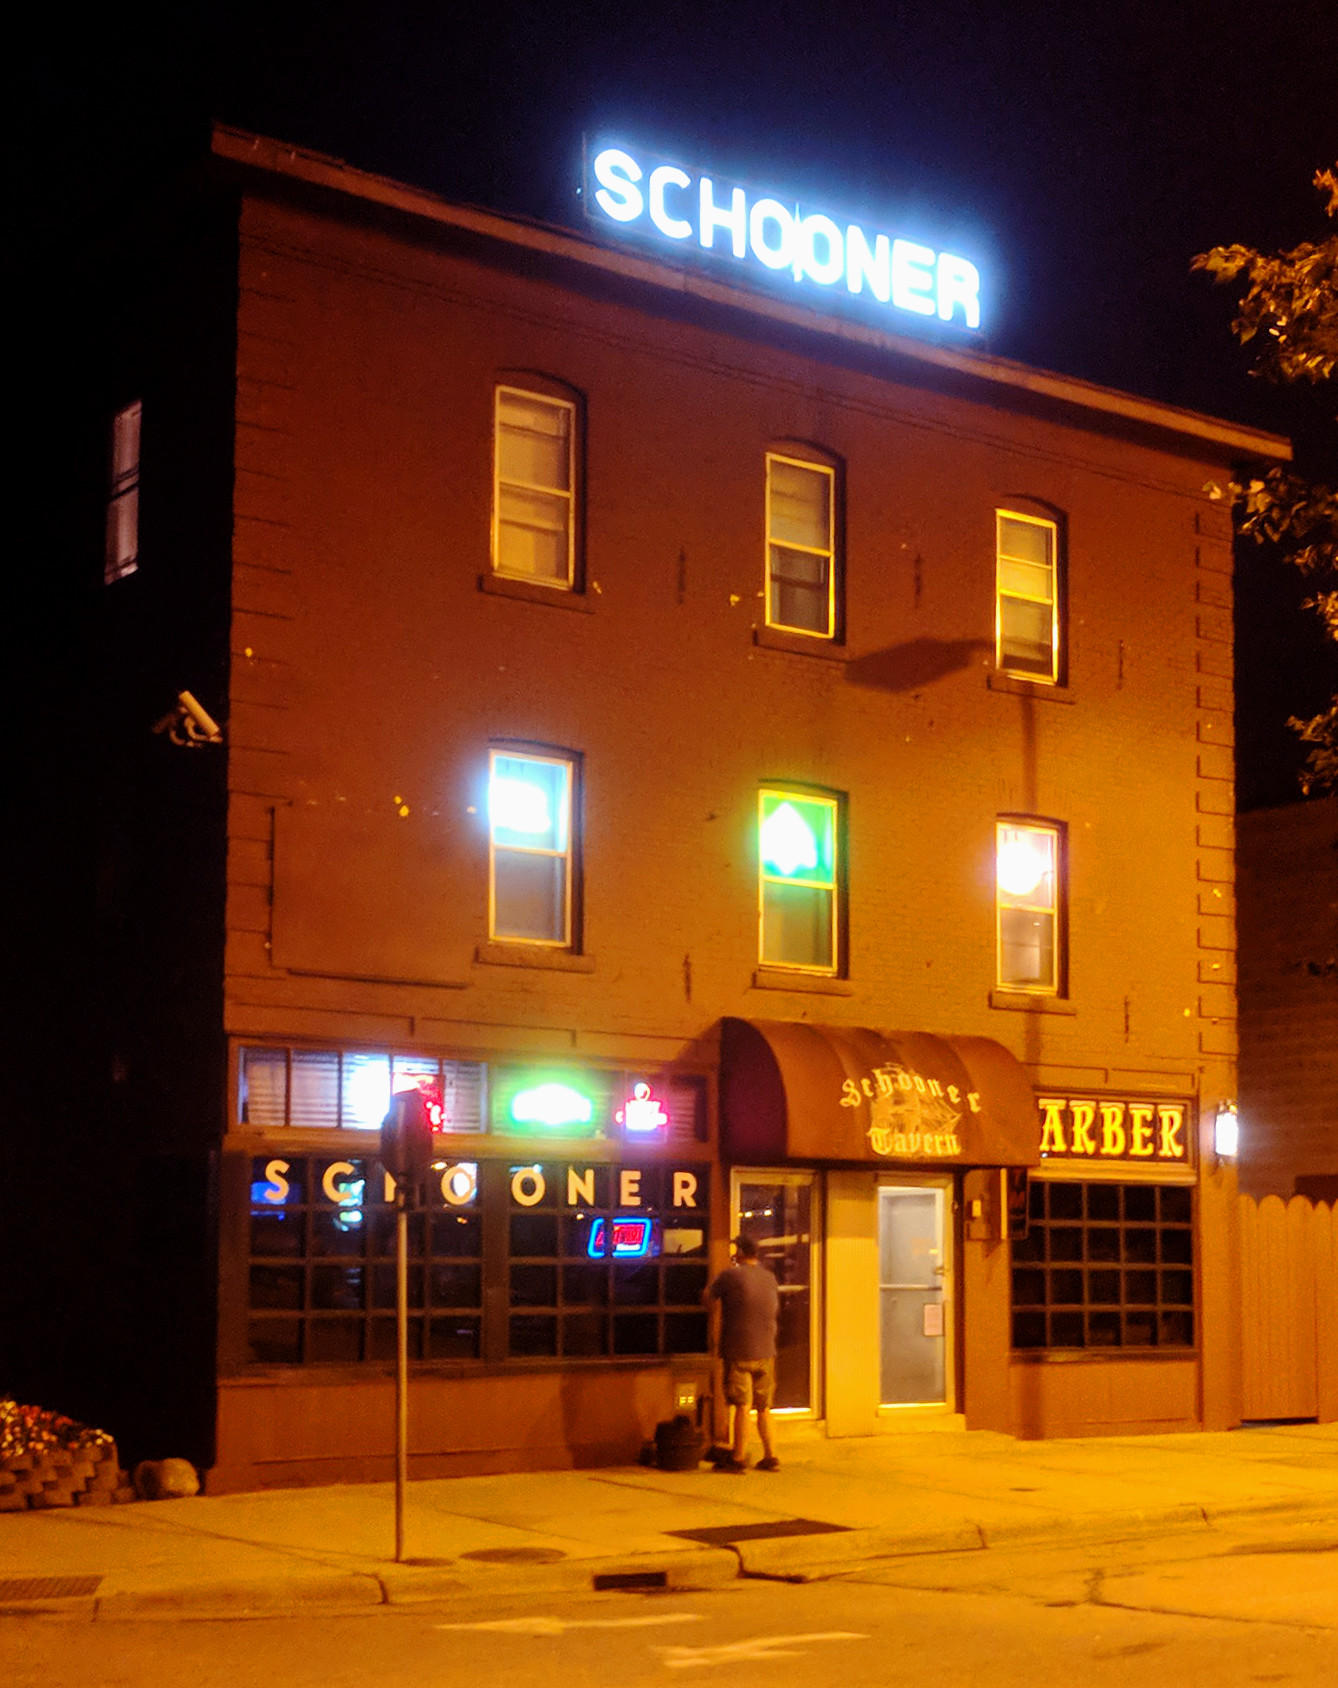 Schooner Tavern with sign lit at night